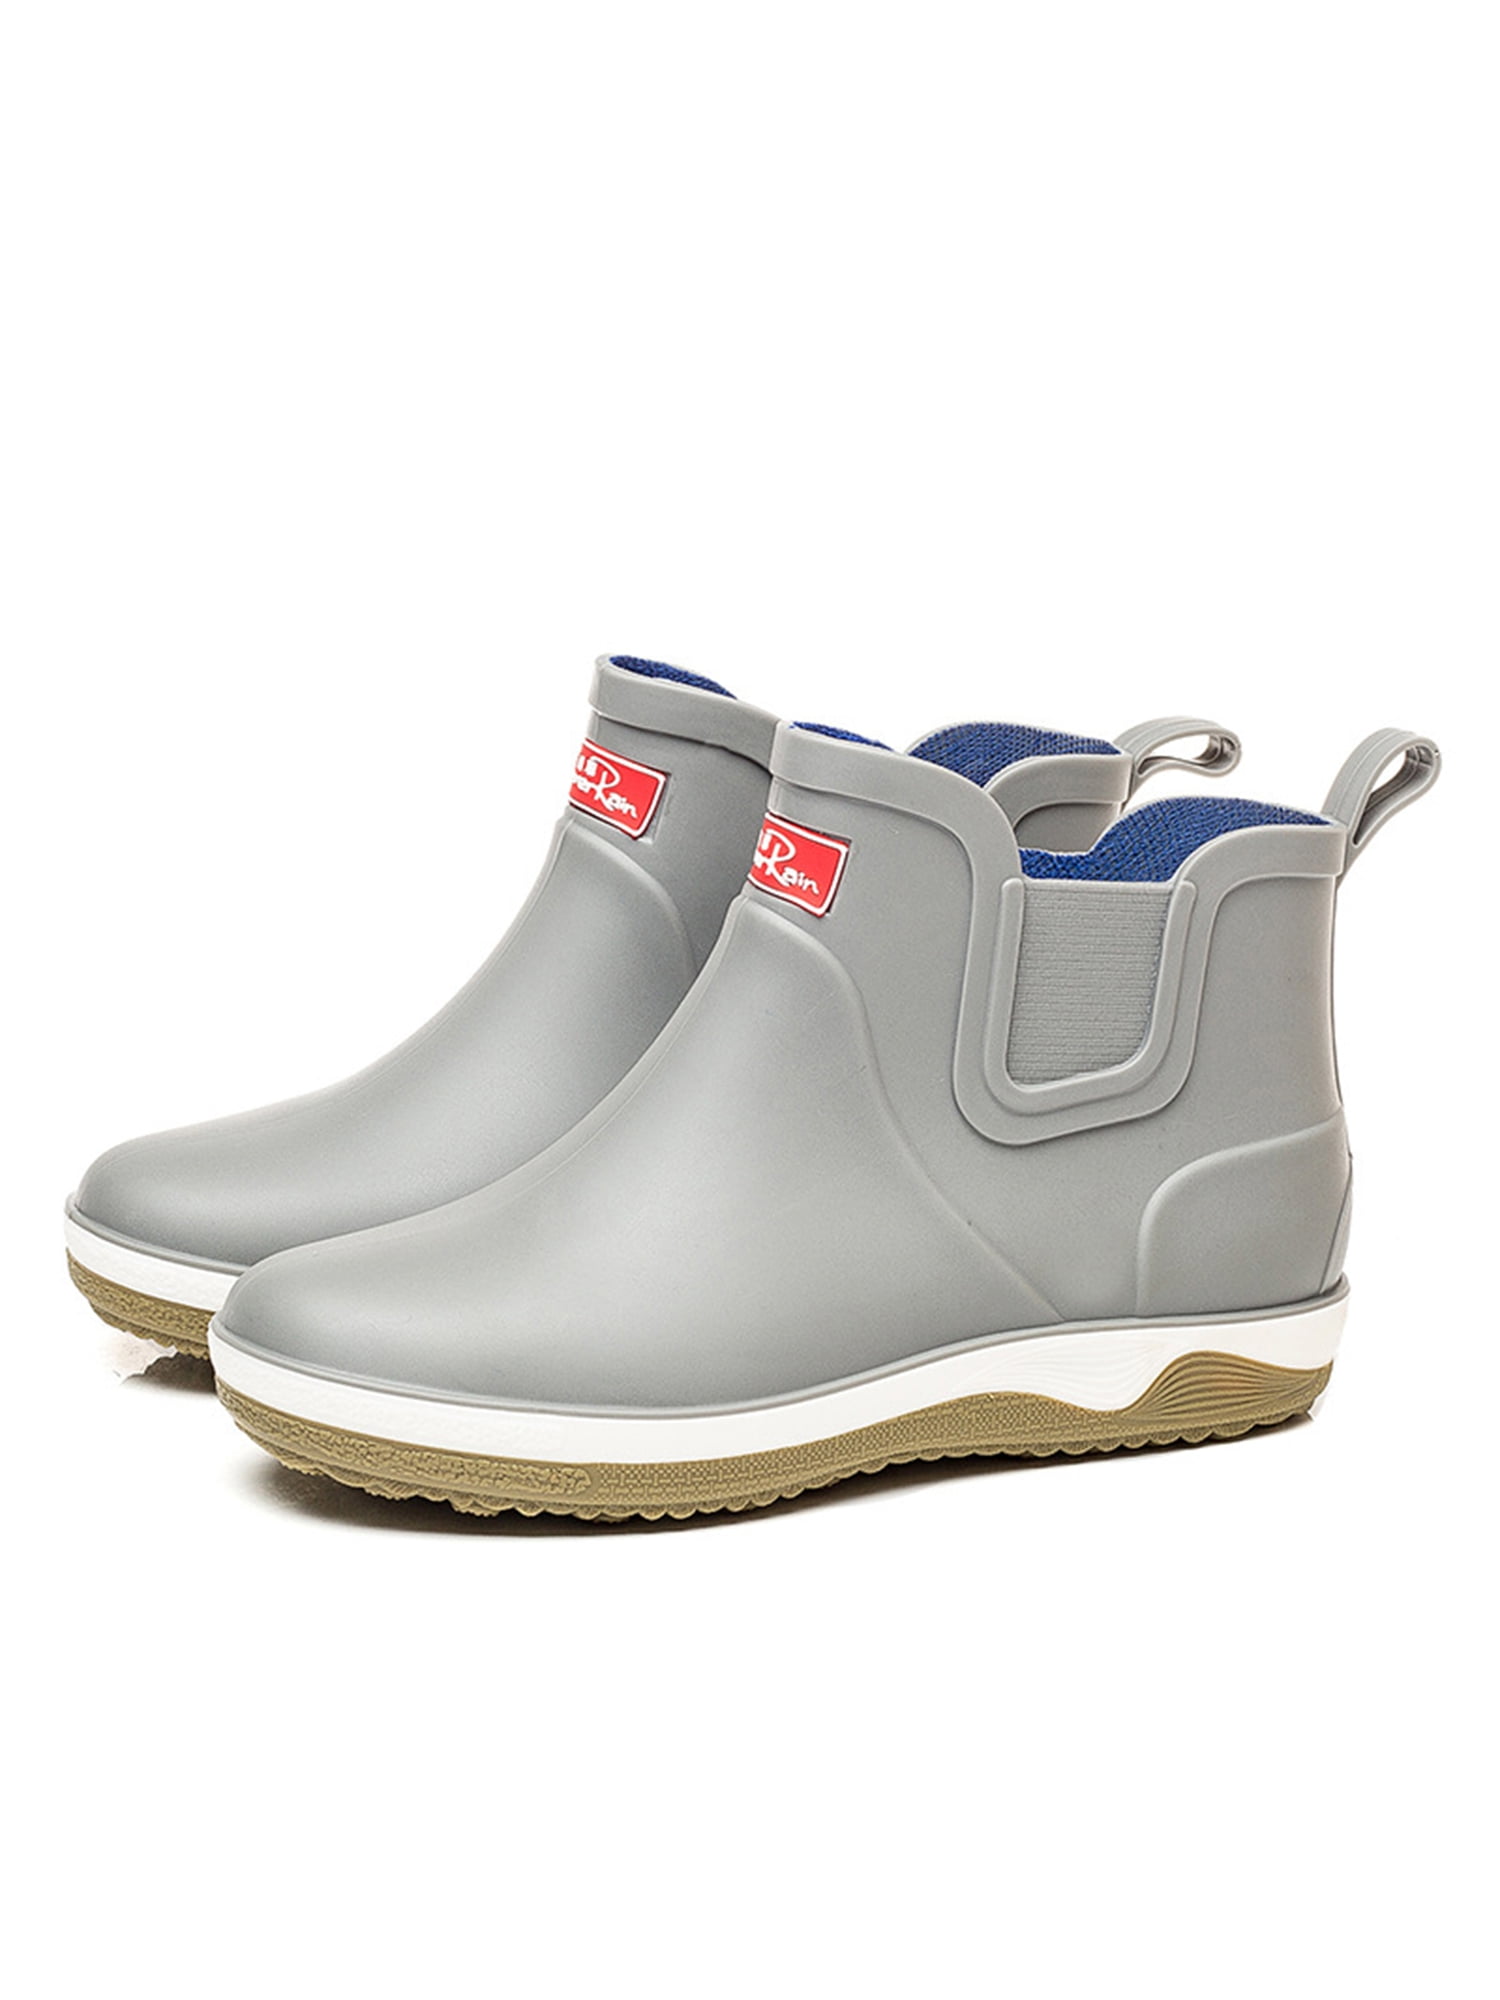 SIMANLAN Men's Rain Boots Work Waterproof Slip On Shoes Walking Casual ...